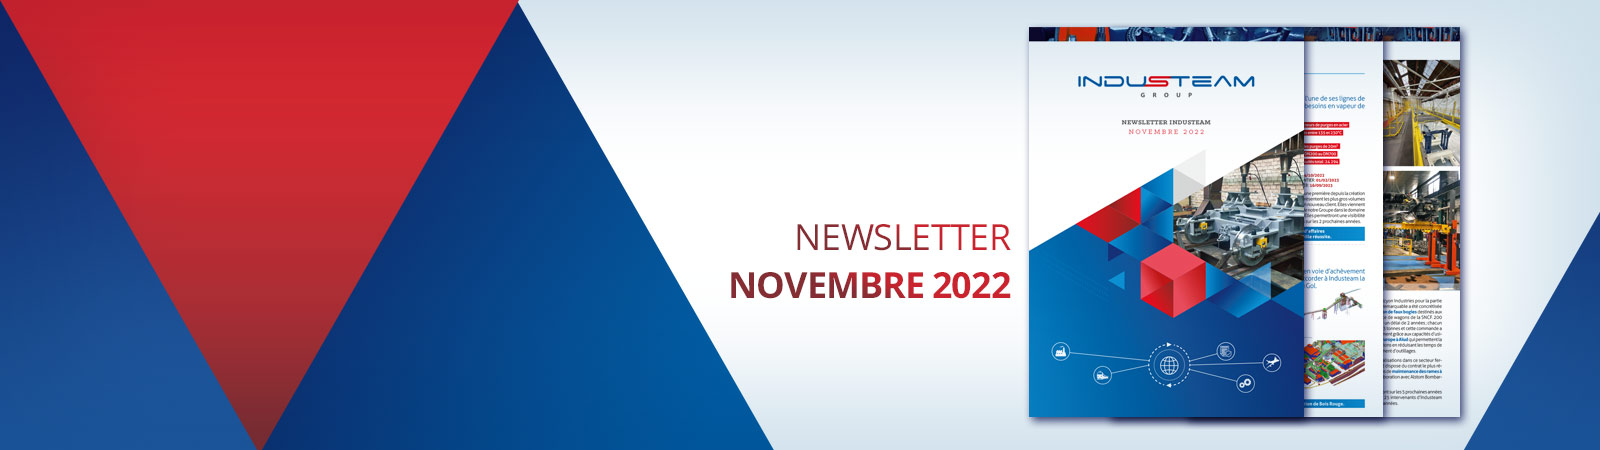 Newsletter novembre 2022